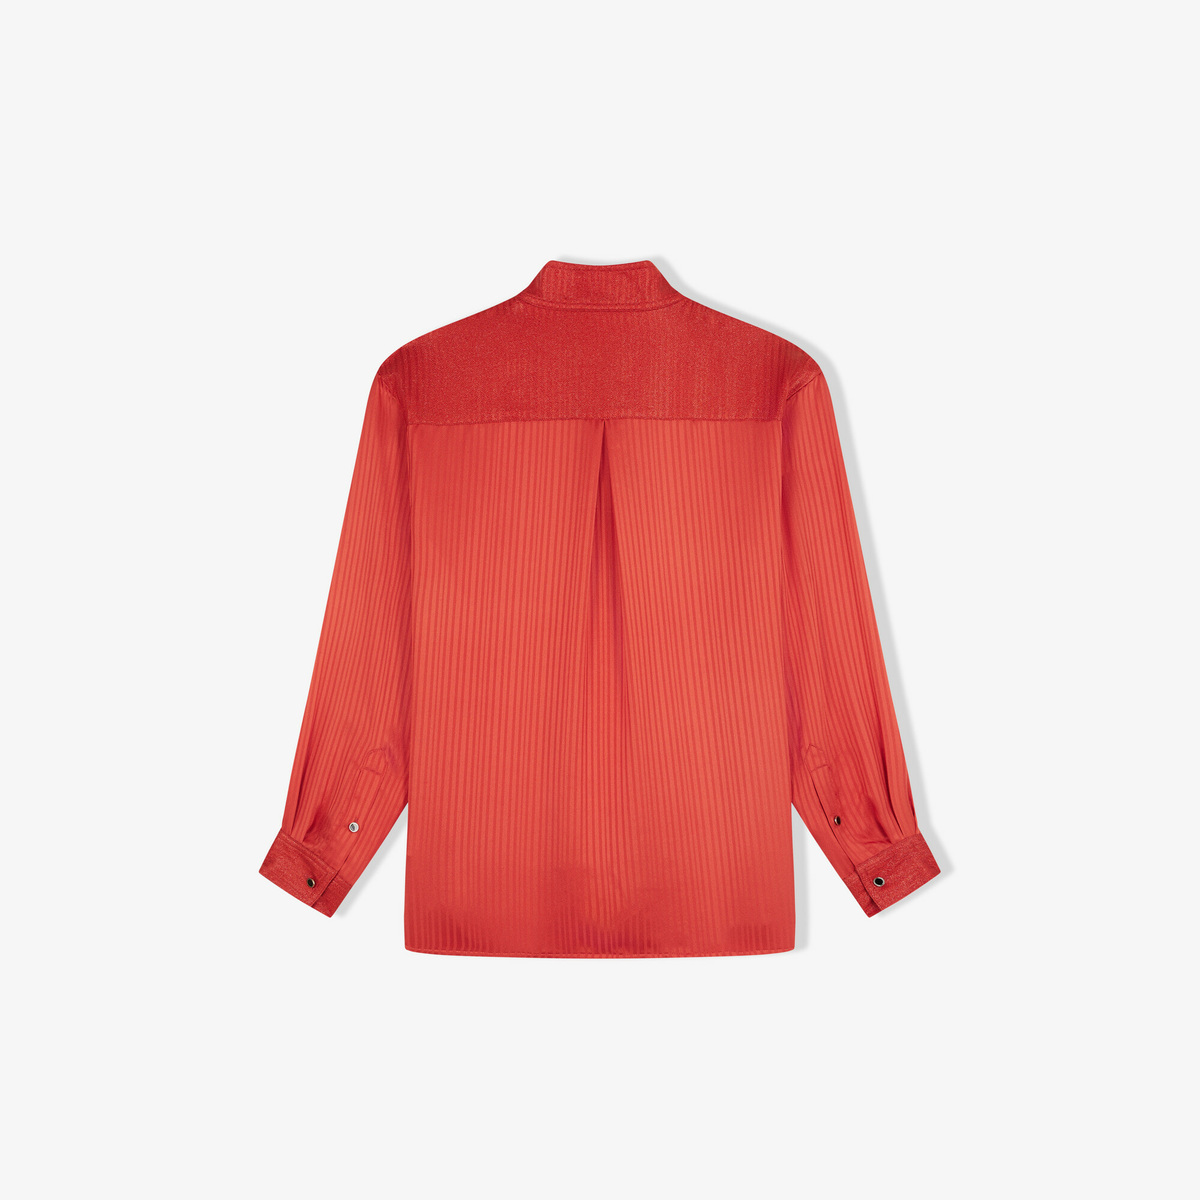 Valois Jacquard Shirt, Blood Orange - Silk - image 2